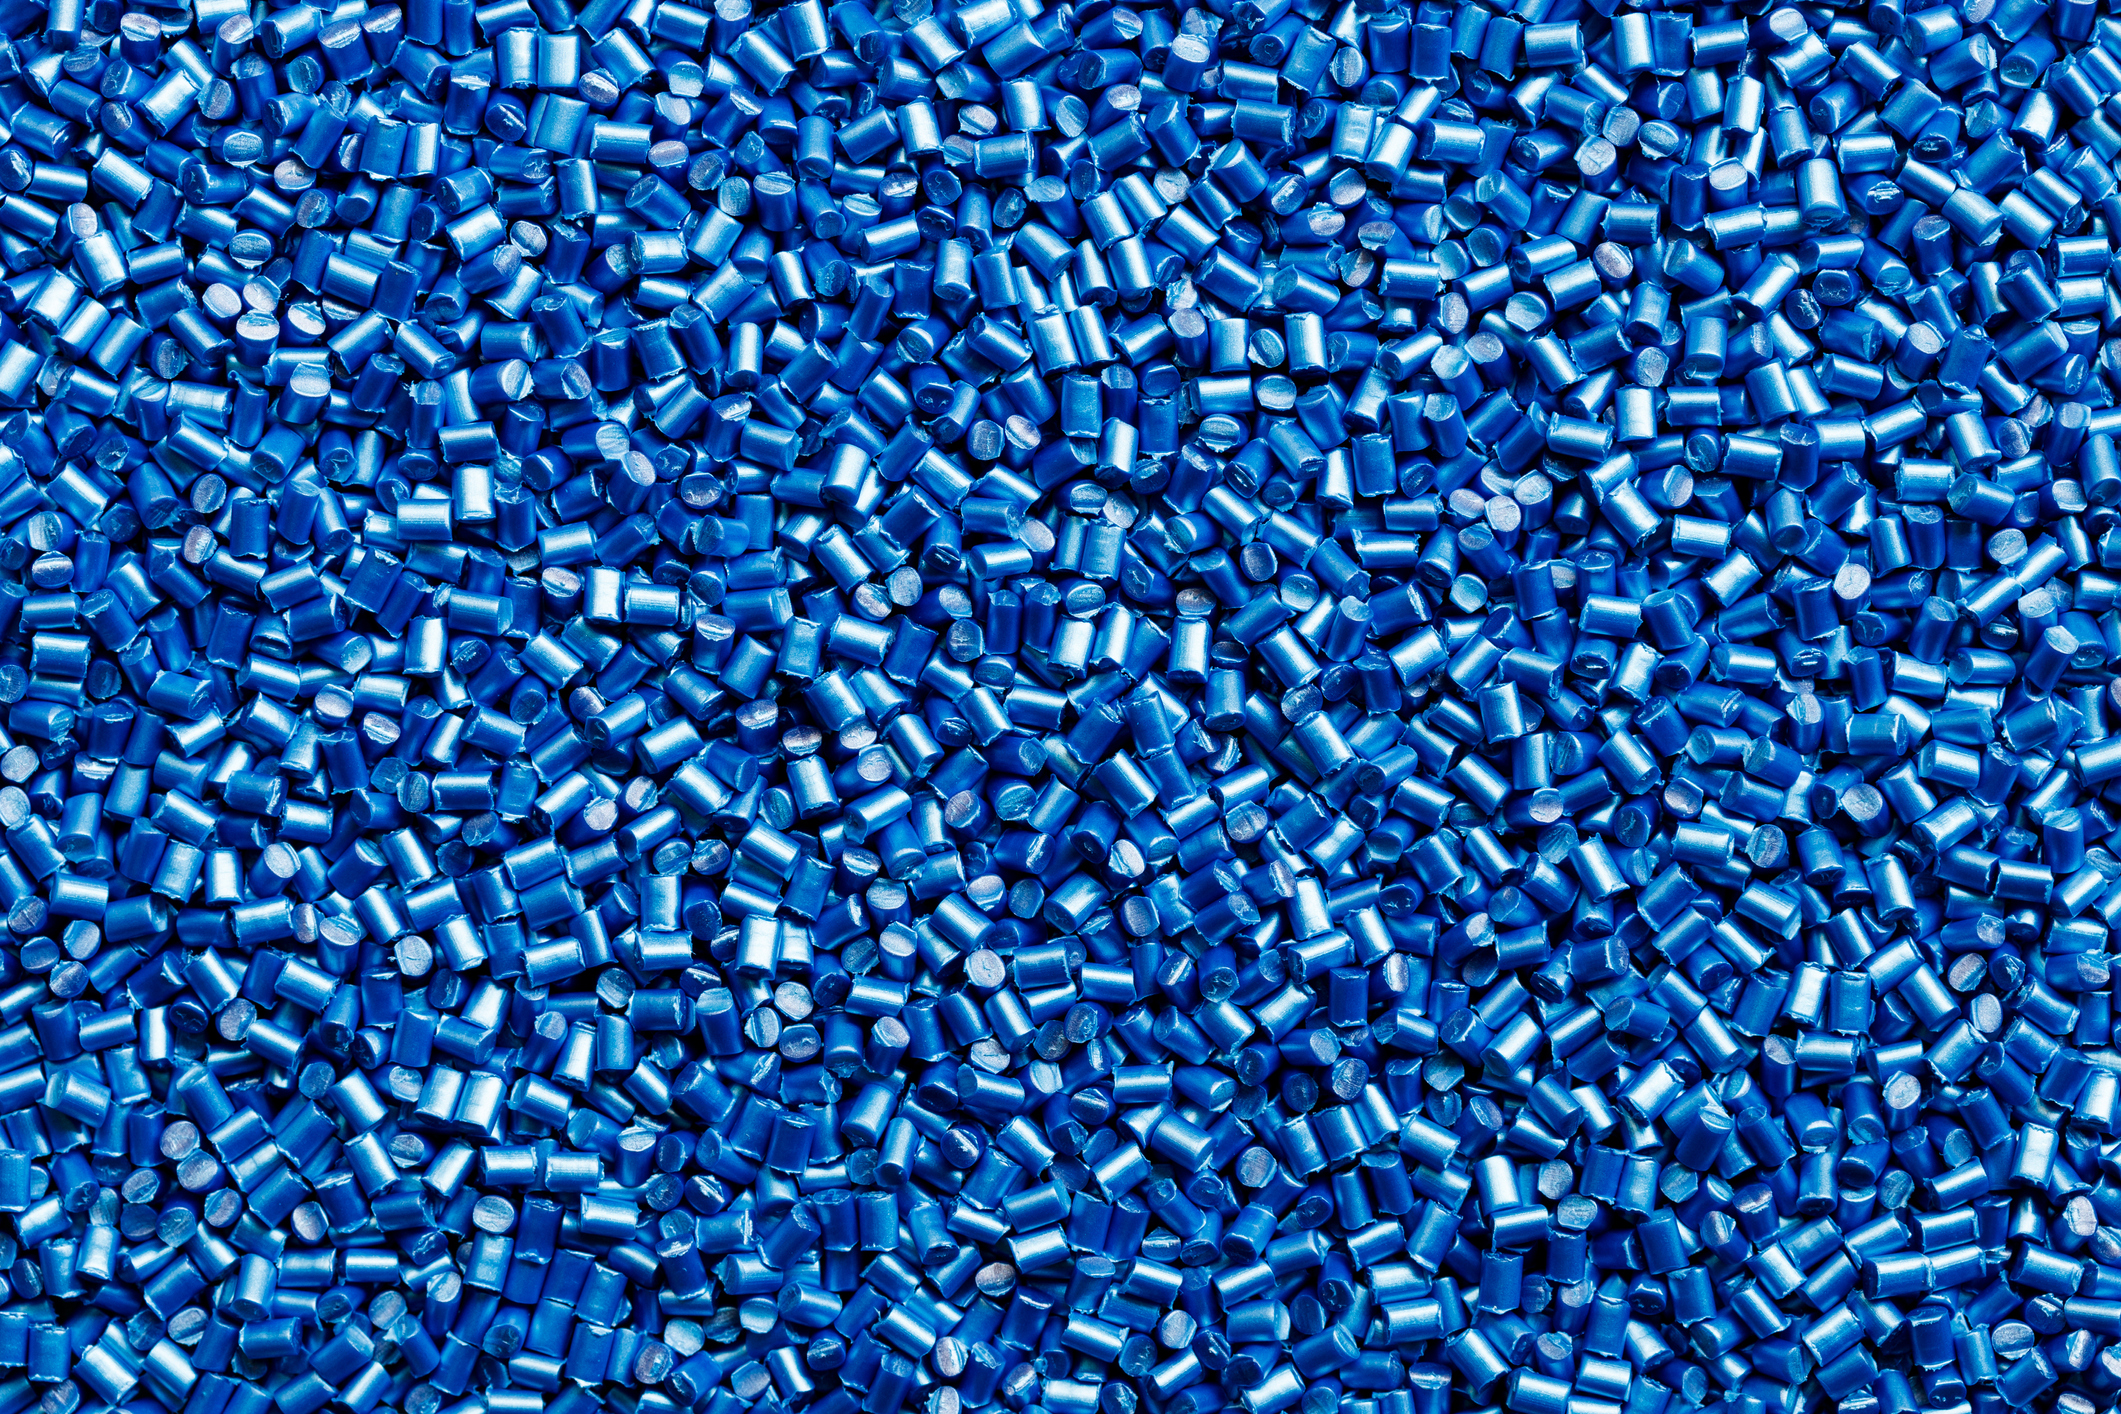 Thousands of blue polymer pellets